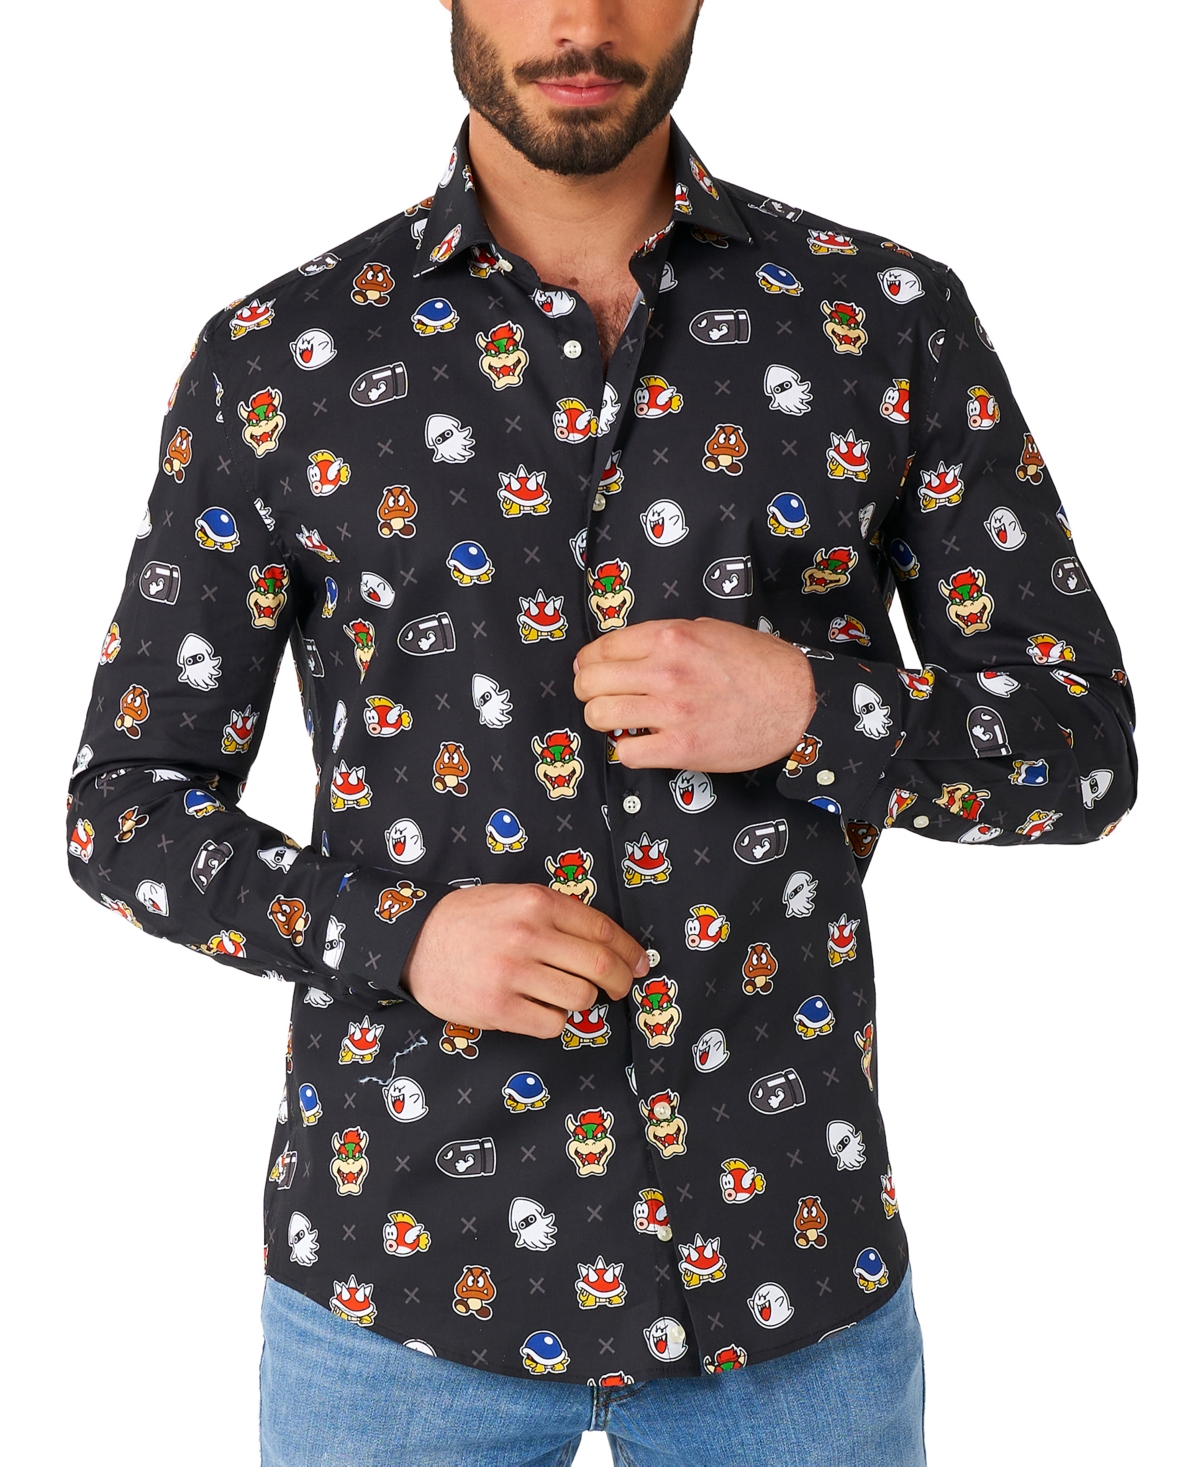 Men's Long-Sleeve Super Mario Bad Guys Graphic Shirt - Black